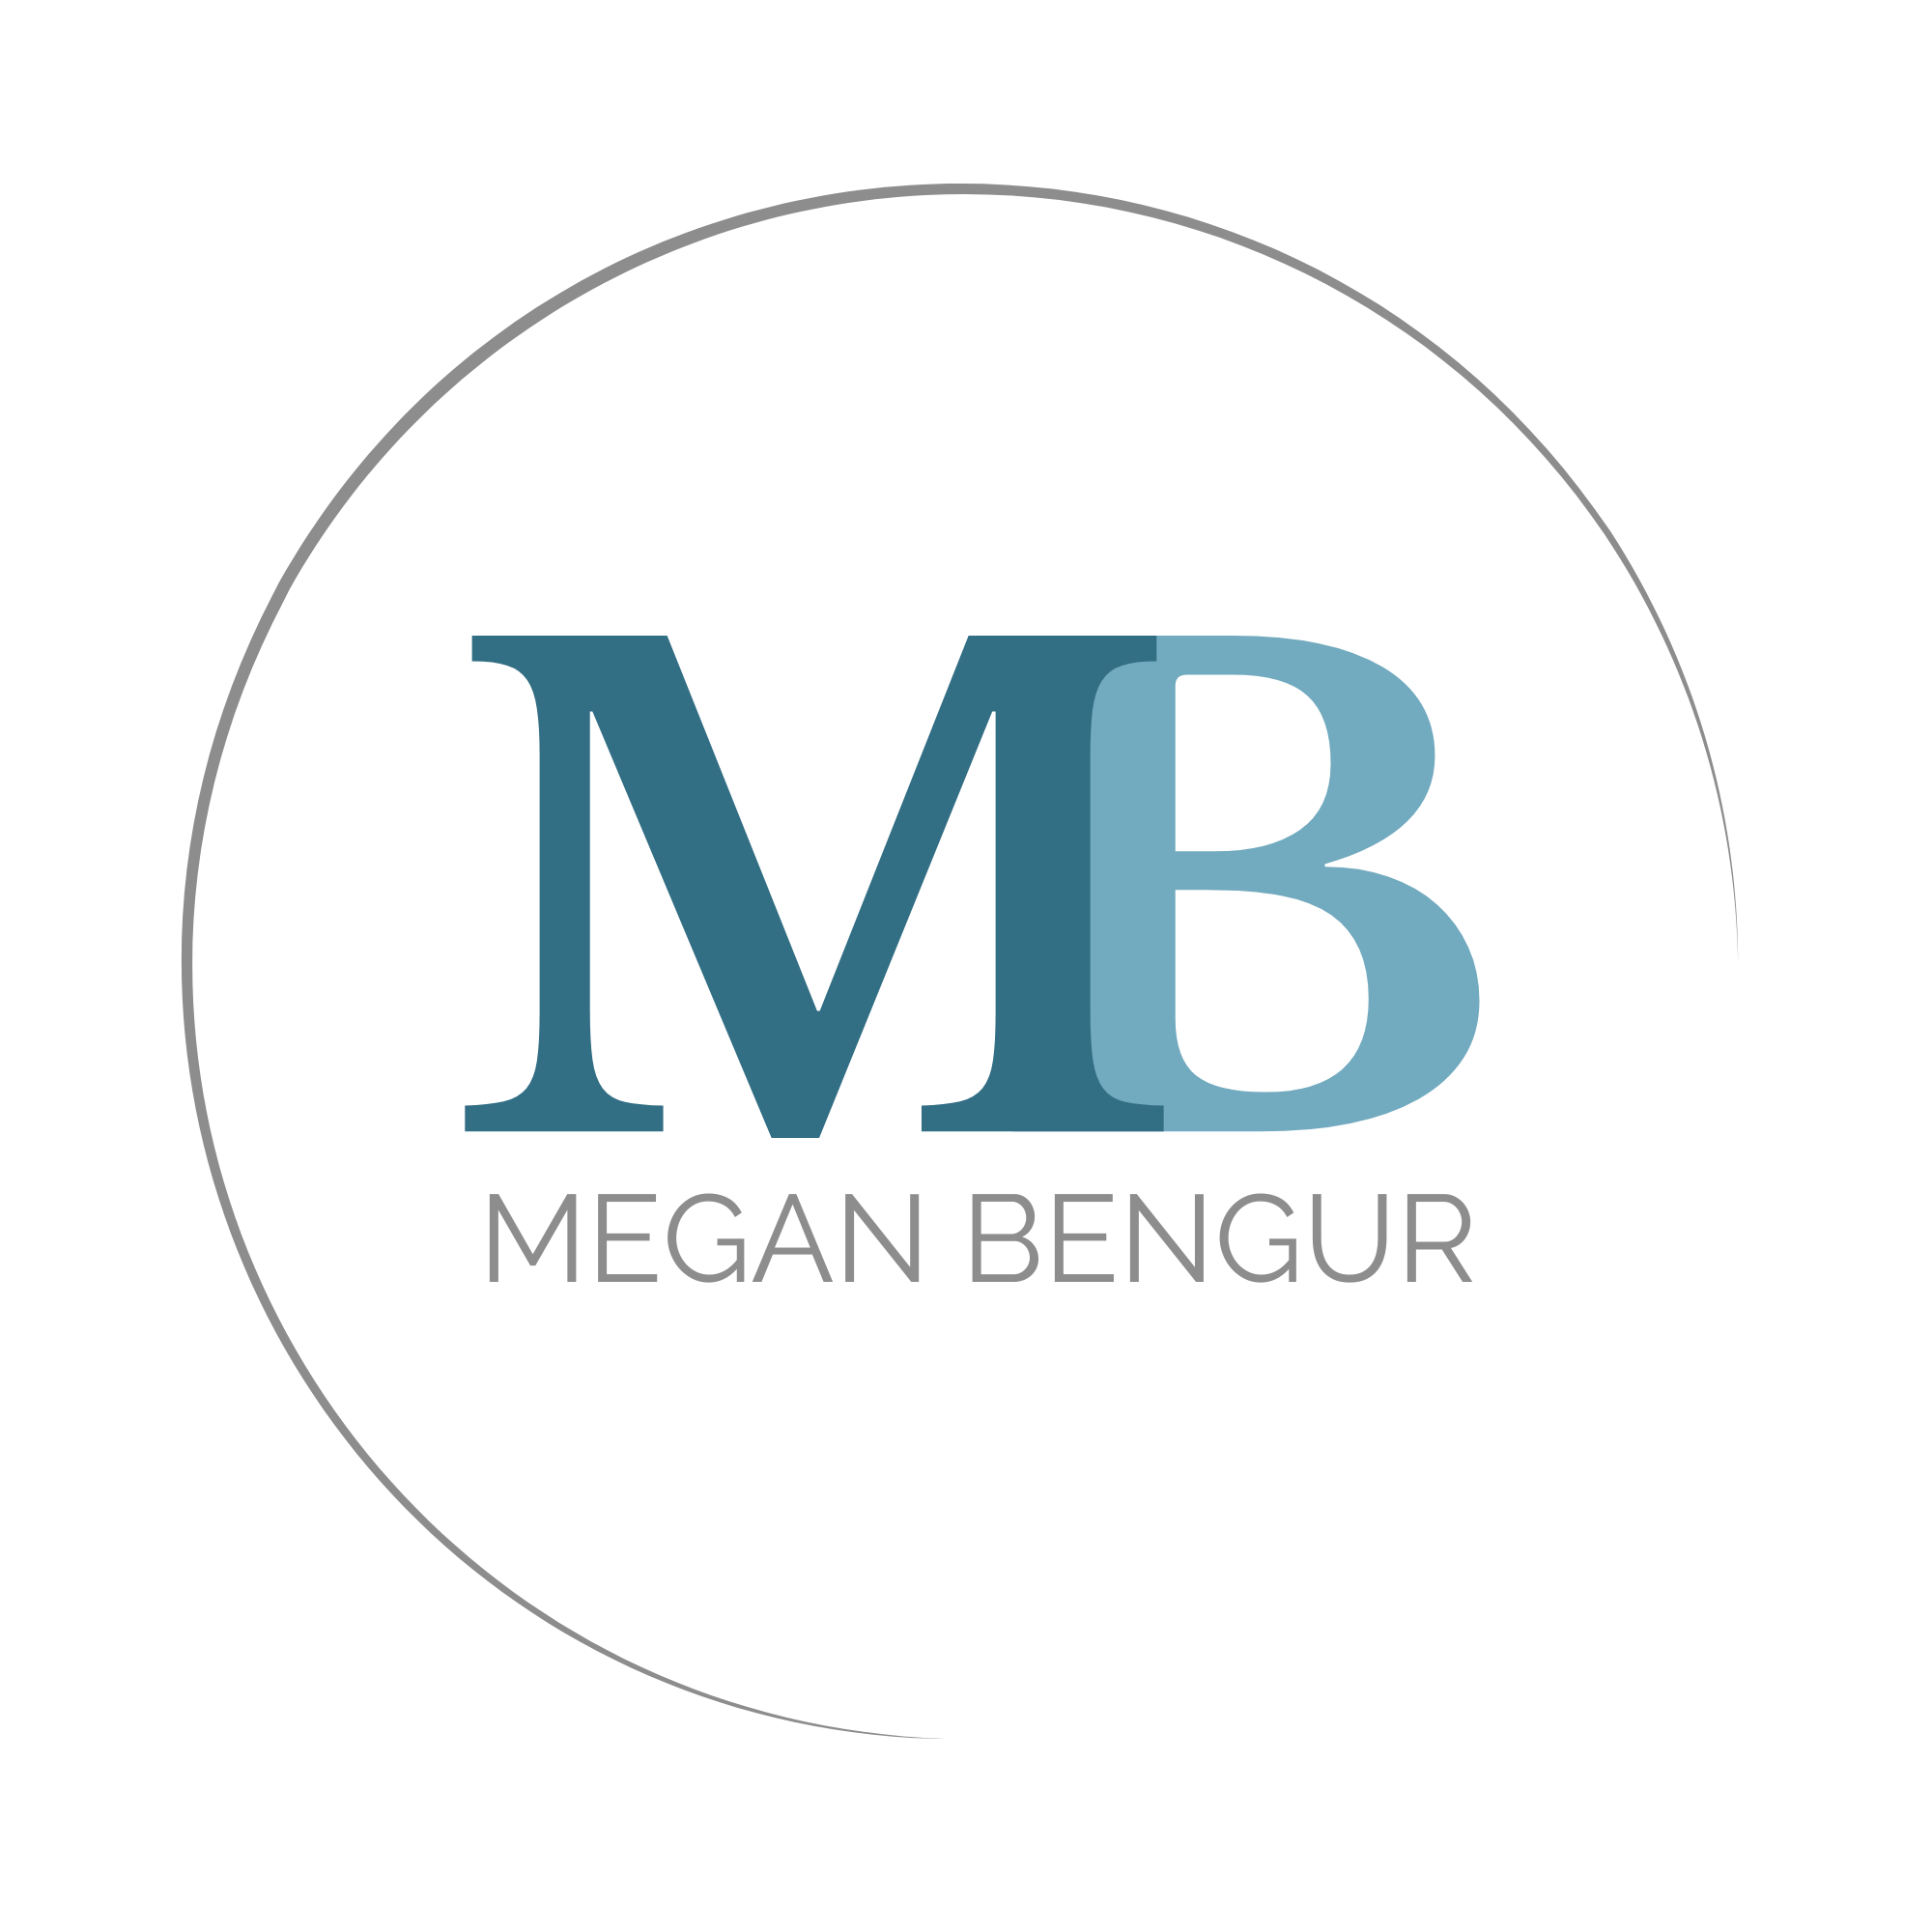 Megan Bengur